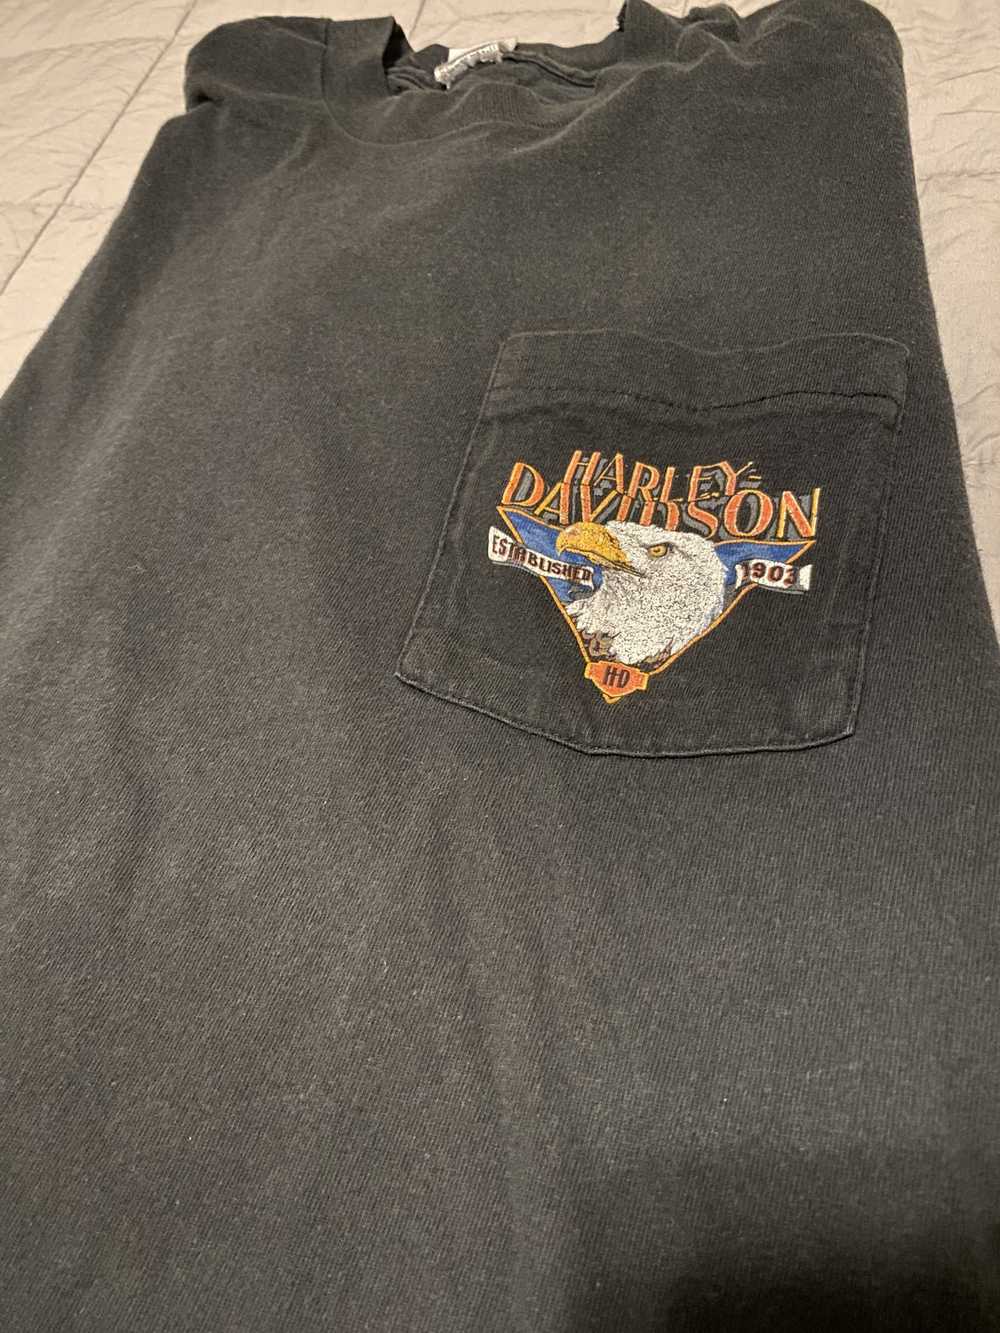 Harley Davidson Vintage Harley Davidson Shirt - image 1